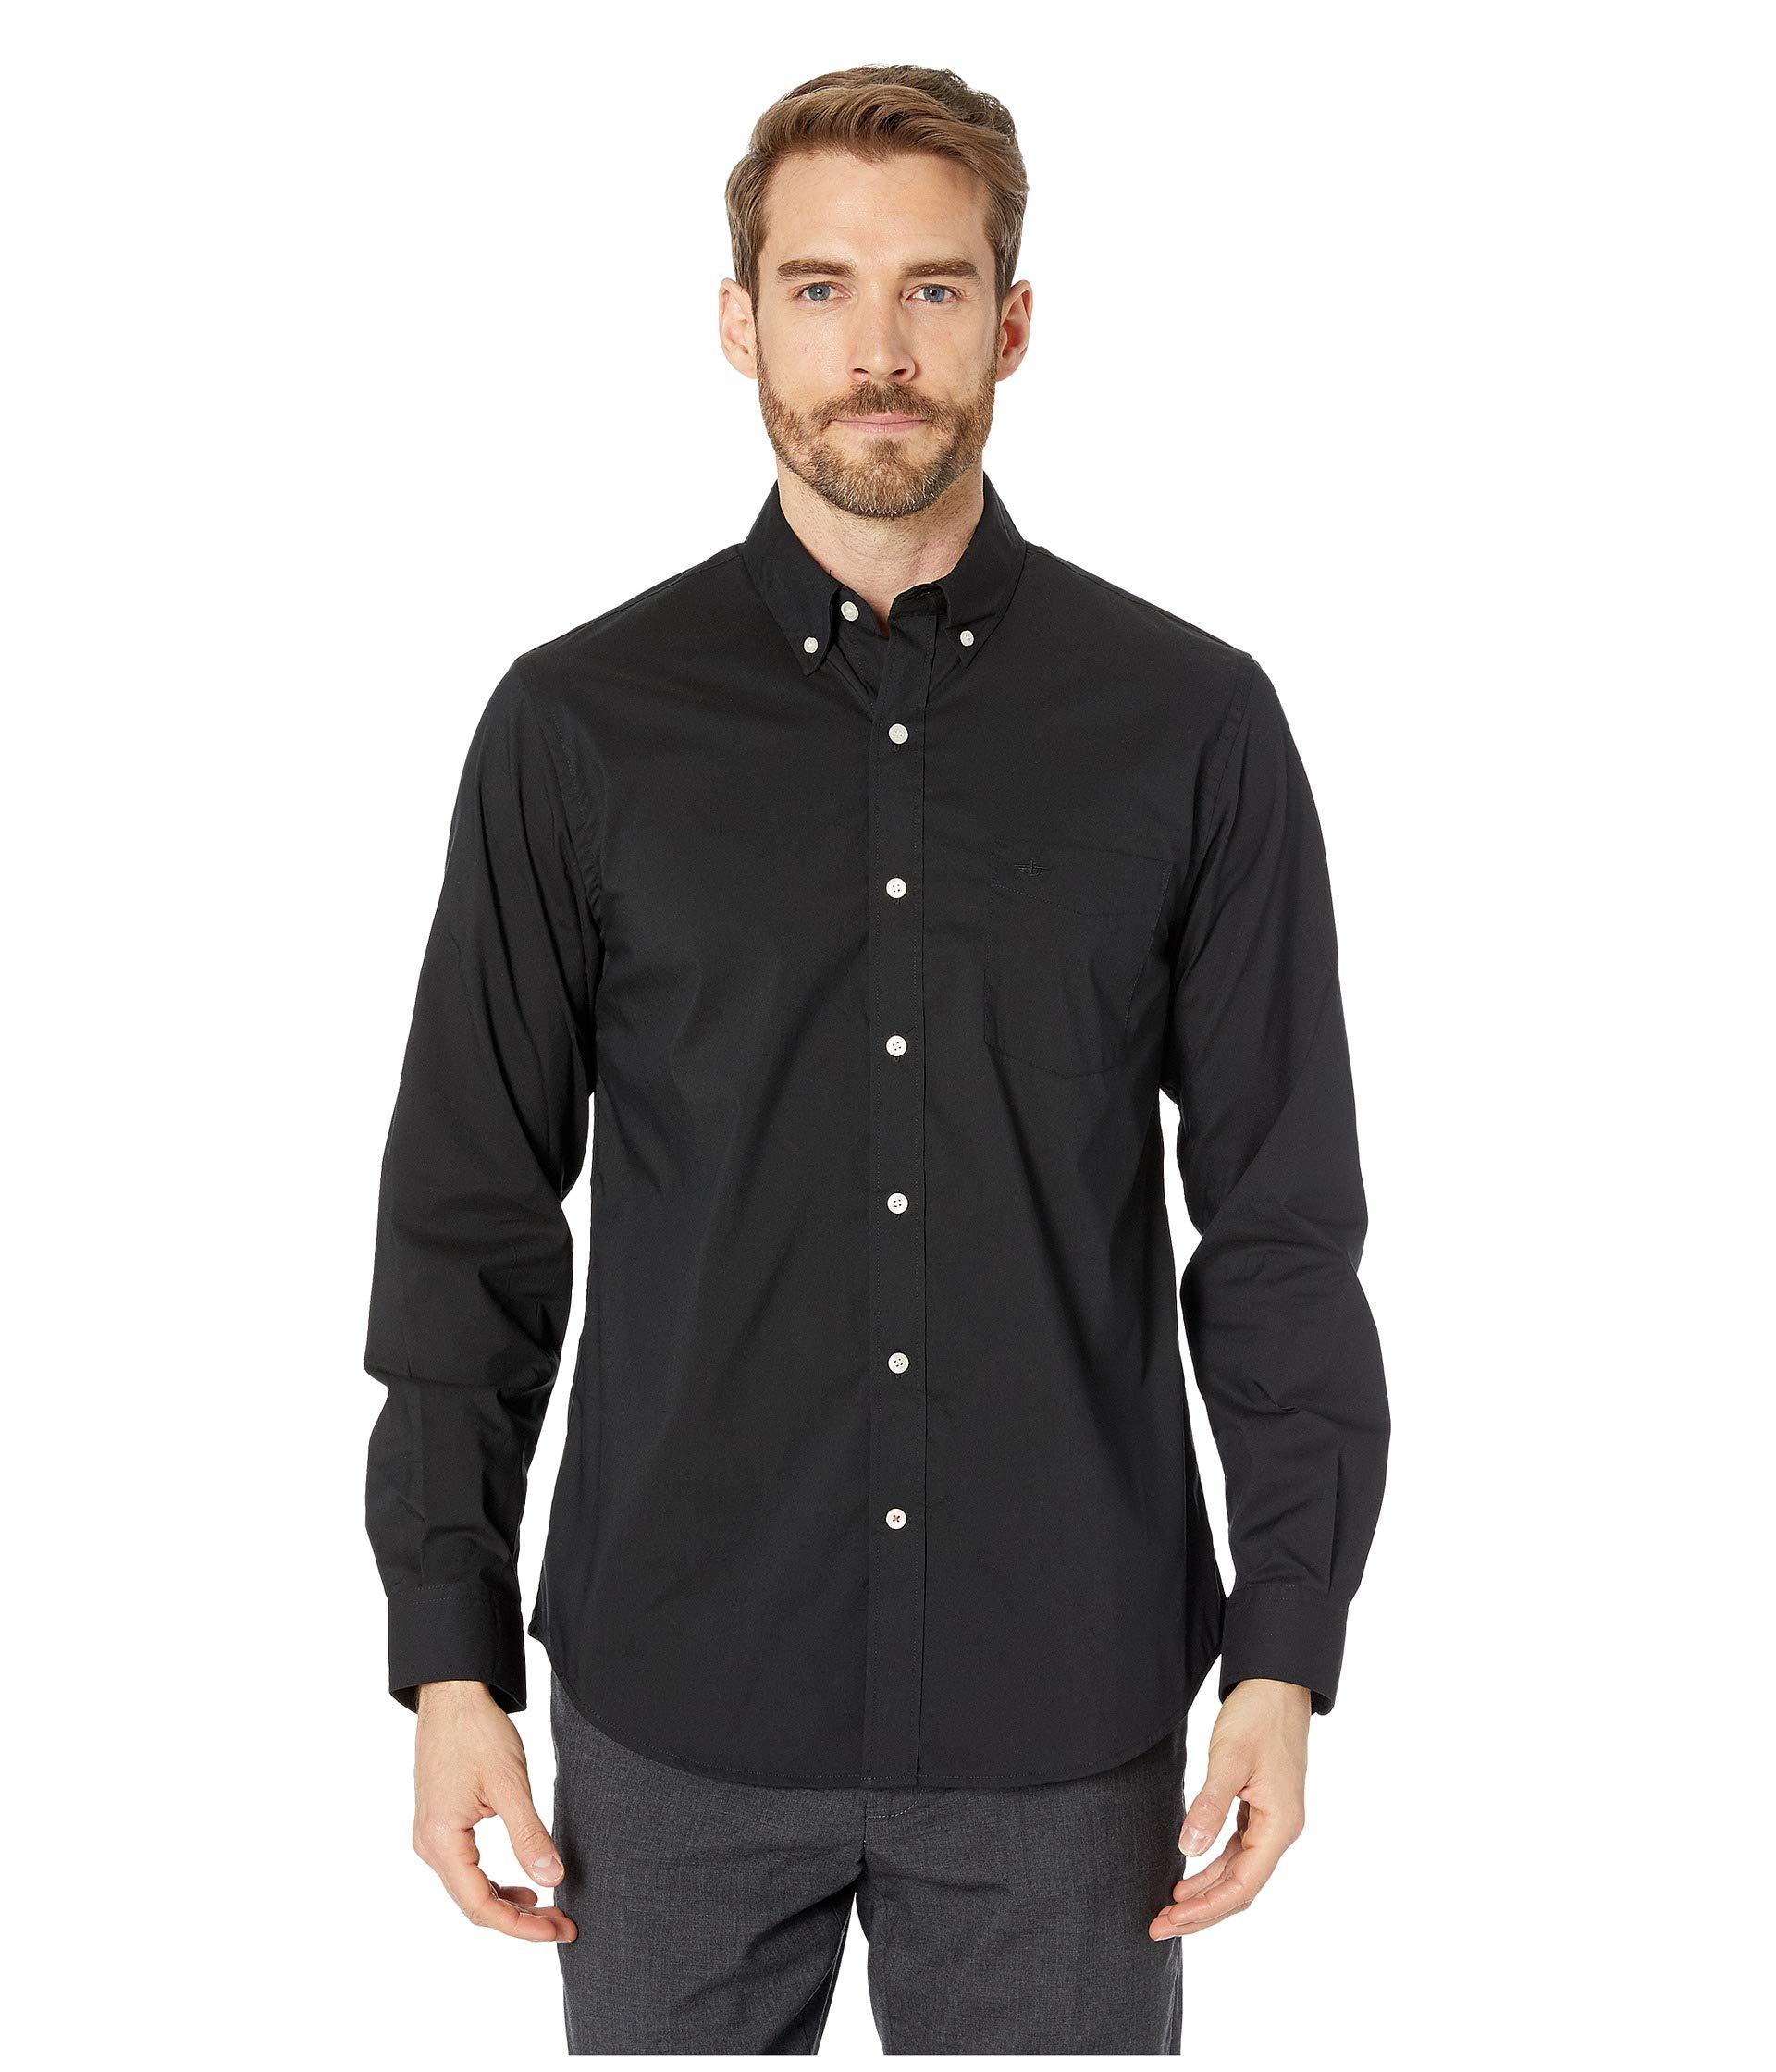 Dockers Long Sleeve Signature Comfort Flex Shirt in Black for Men - Lyst